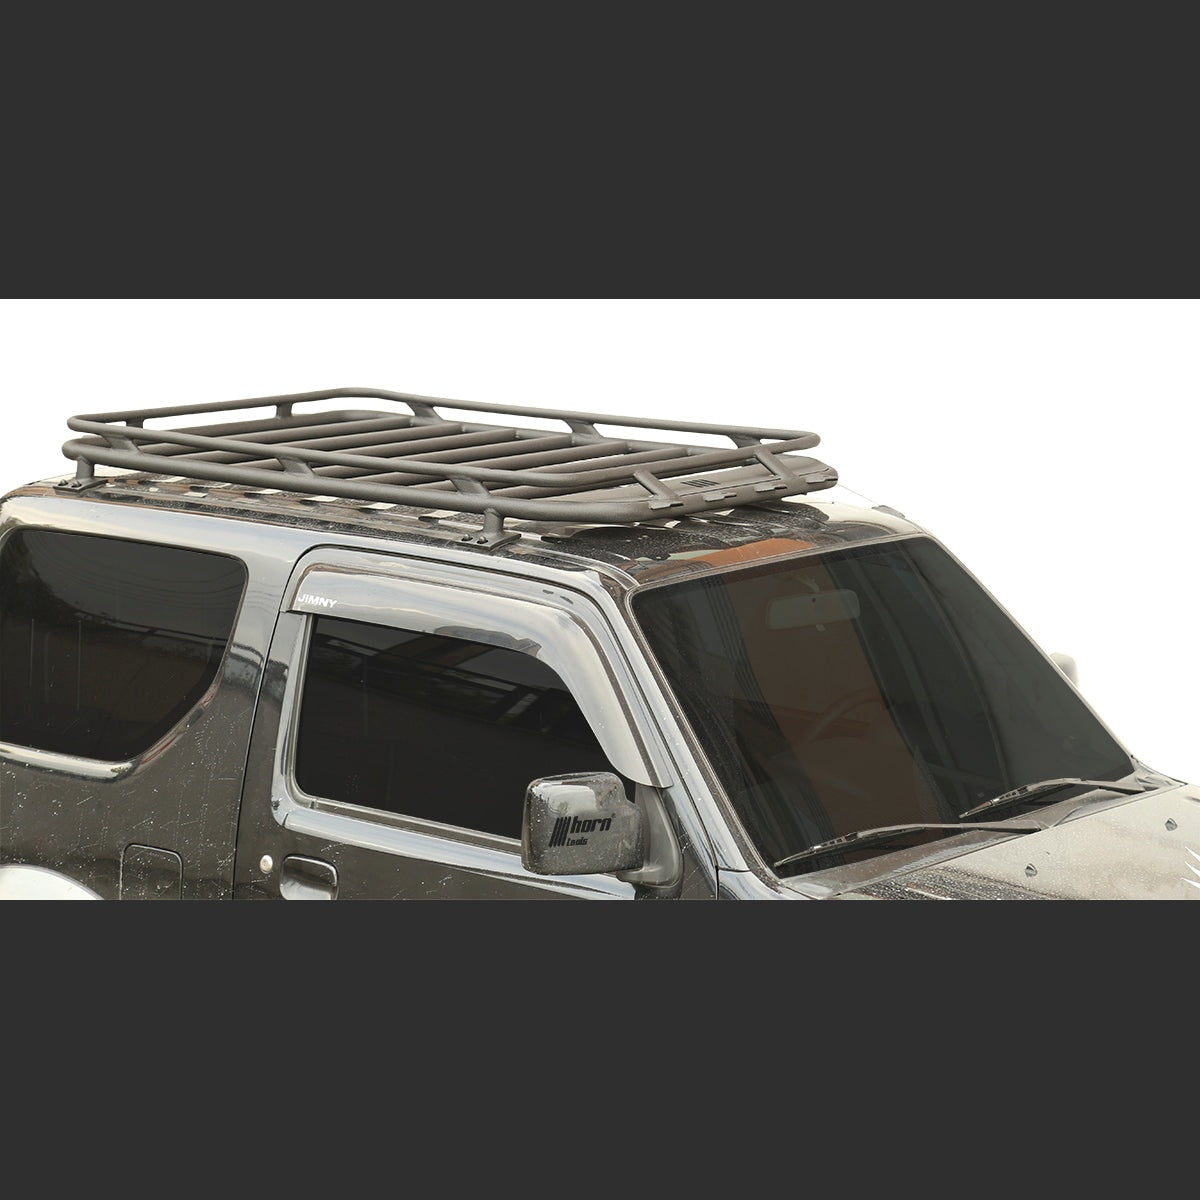 Dachträger El Portador für Suzuki Jimny GJ/HJ kaufen